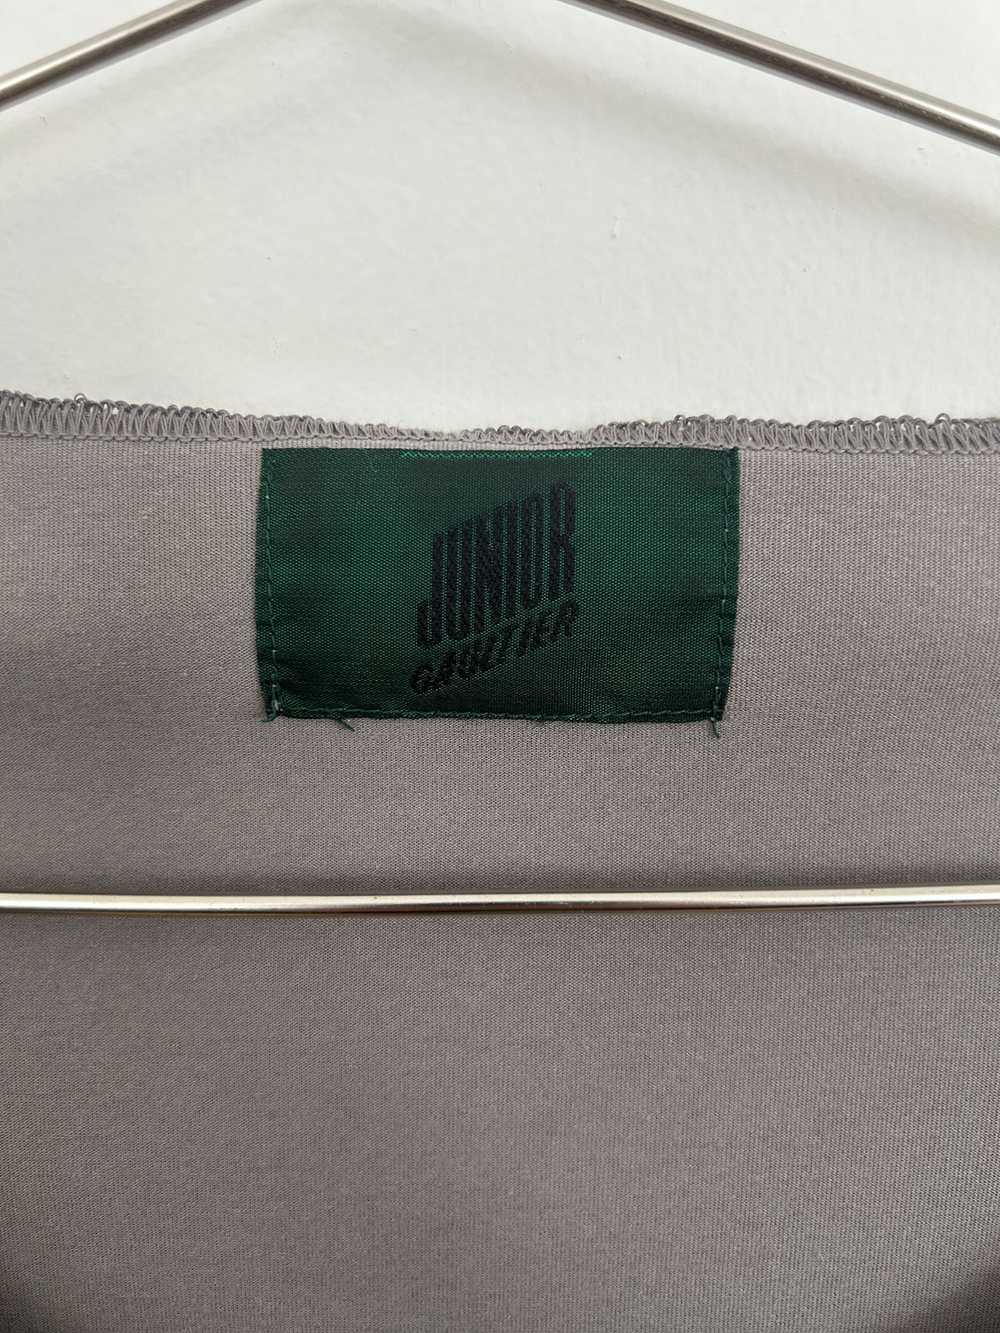 Jean Paul Gaultier JPG Junior Long Sleeve Shirt - image 2